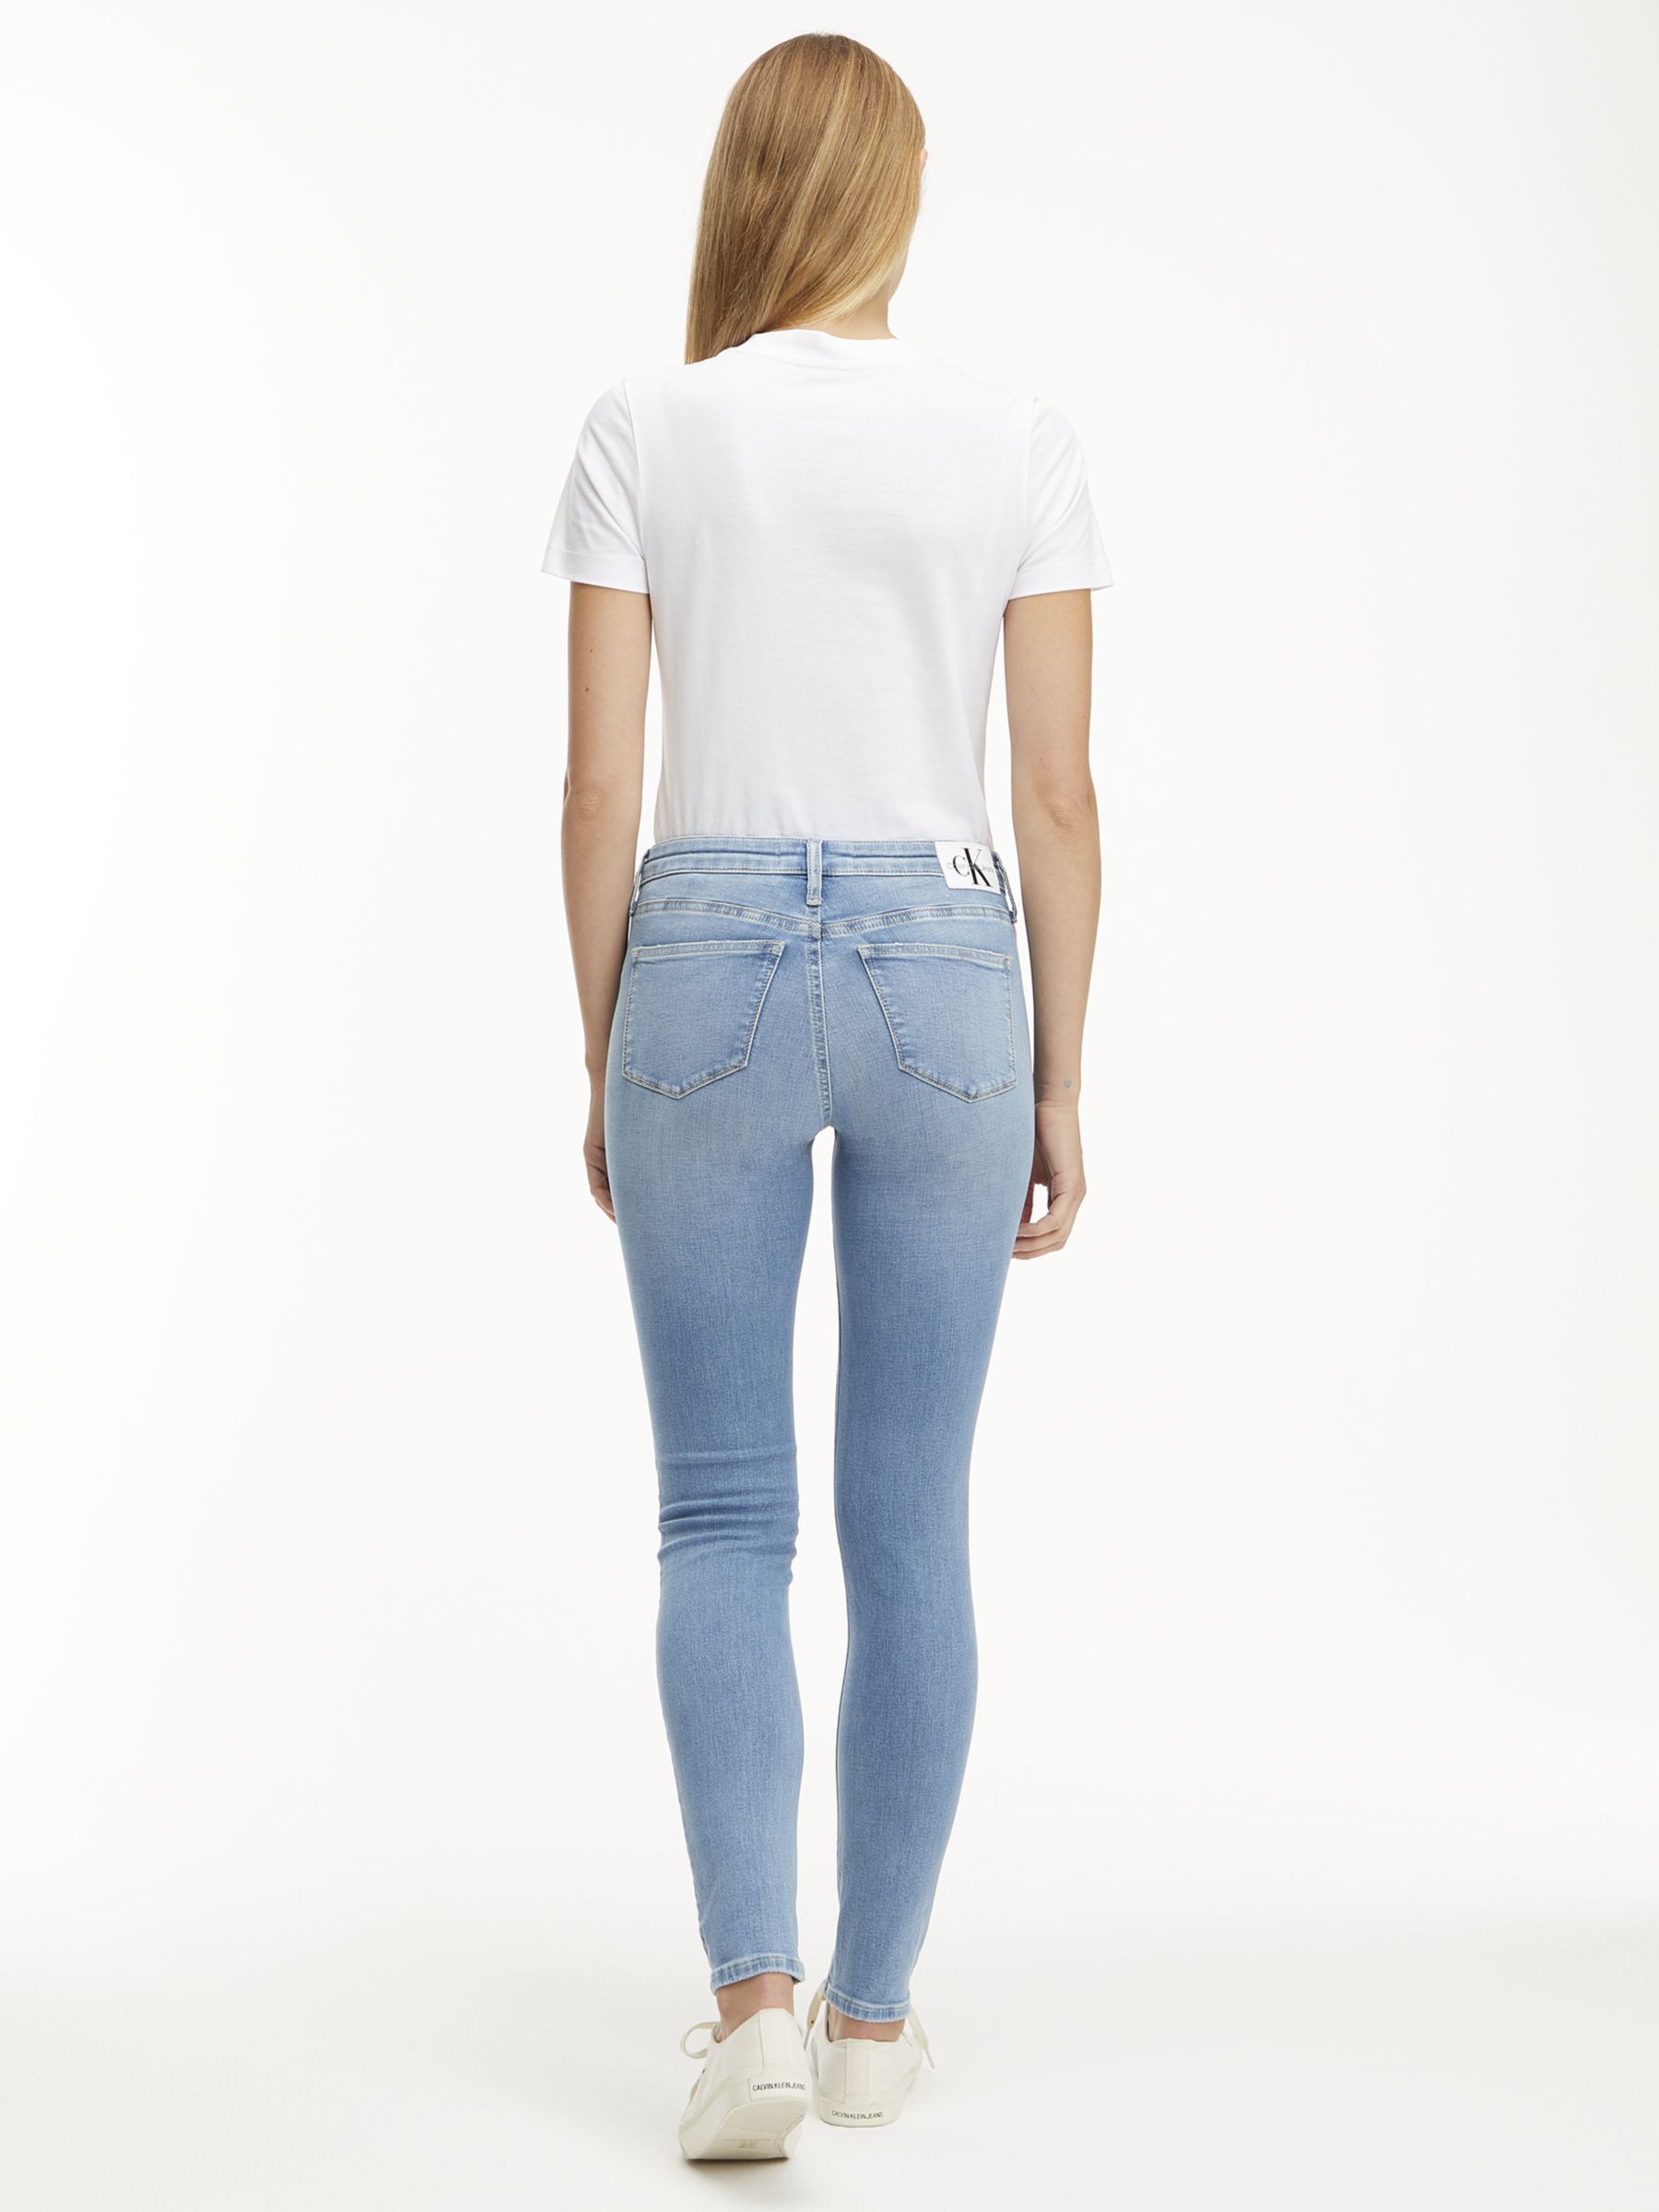 Calvin Klein Mid Rise Skinny Jeans, Light Blue, 25R